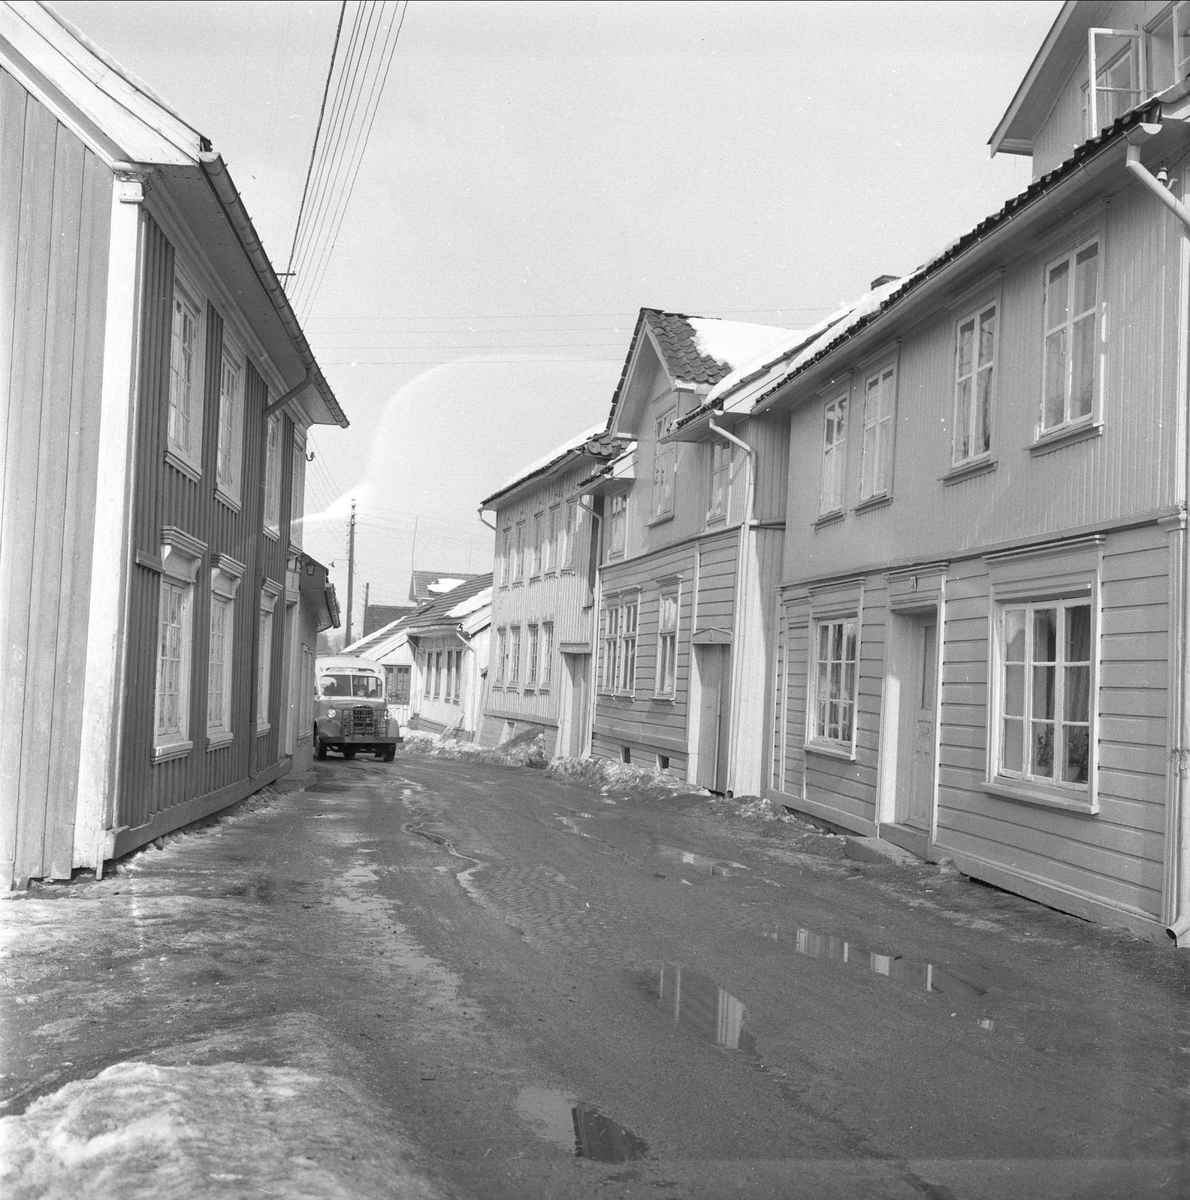 Skien, Telemark, mars 1958. Byjubileum. Gate med trehus.